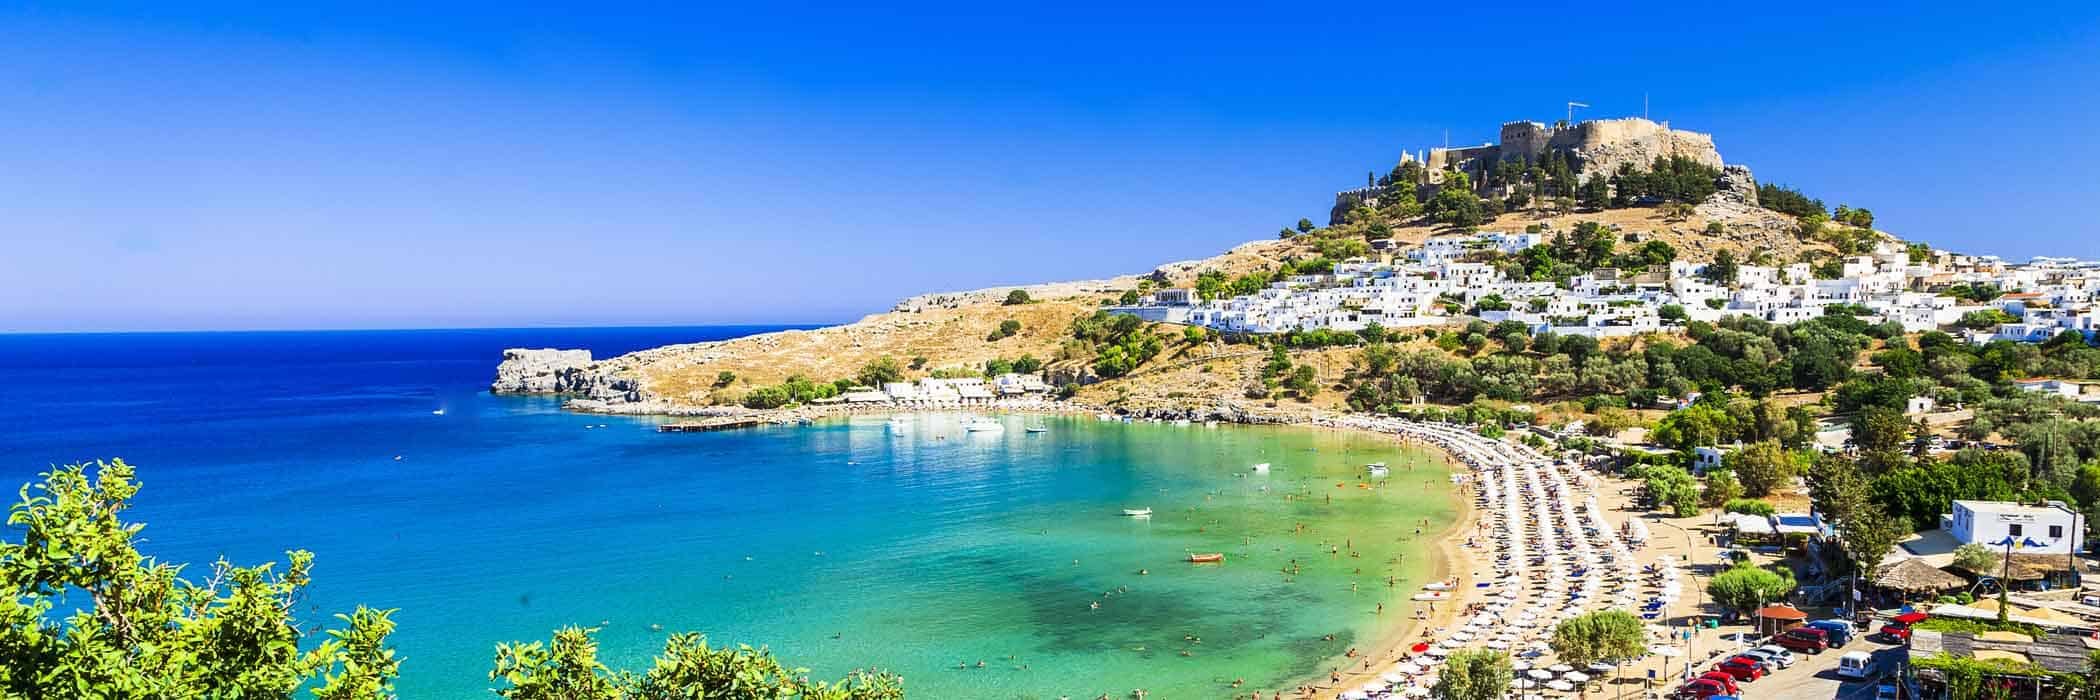 Lindos Beach, Rhodes - All Inclusive Holidays To Greece